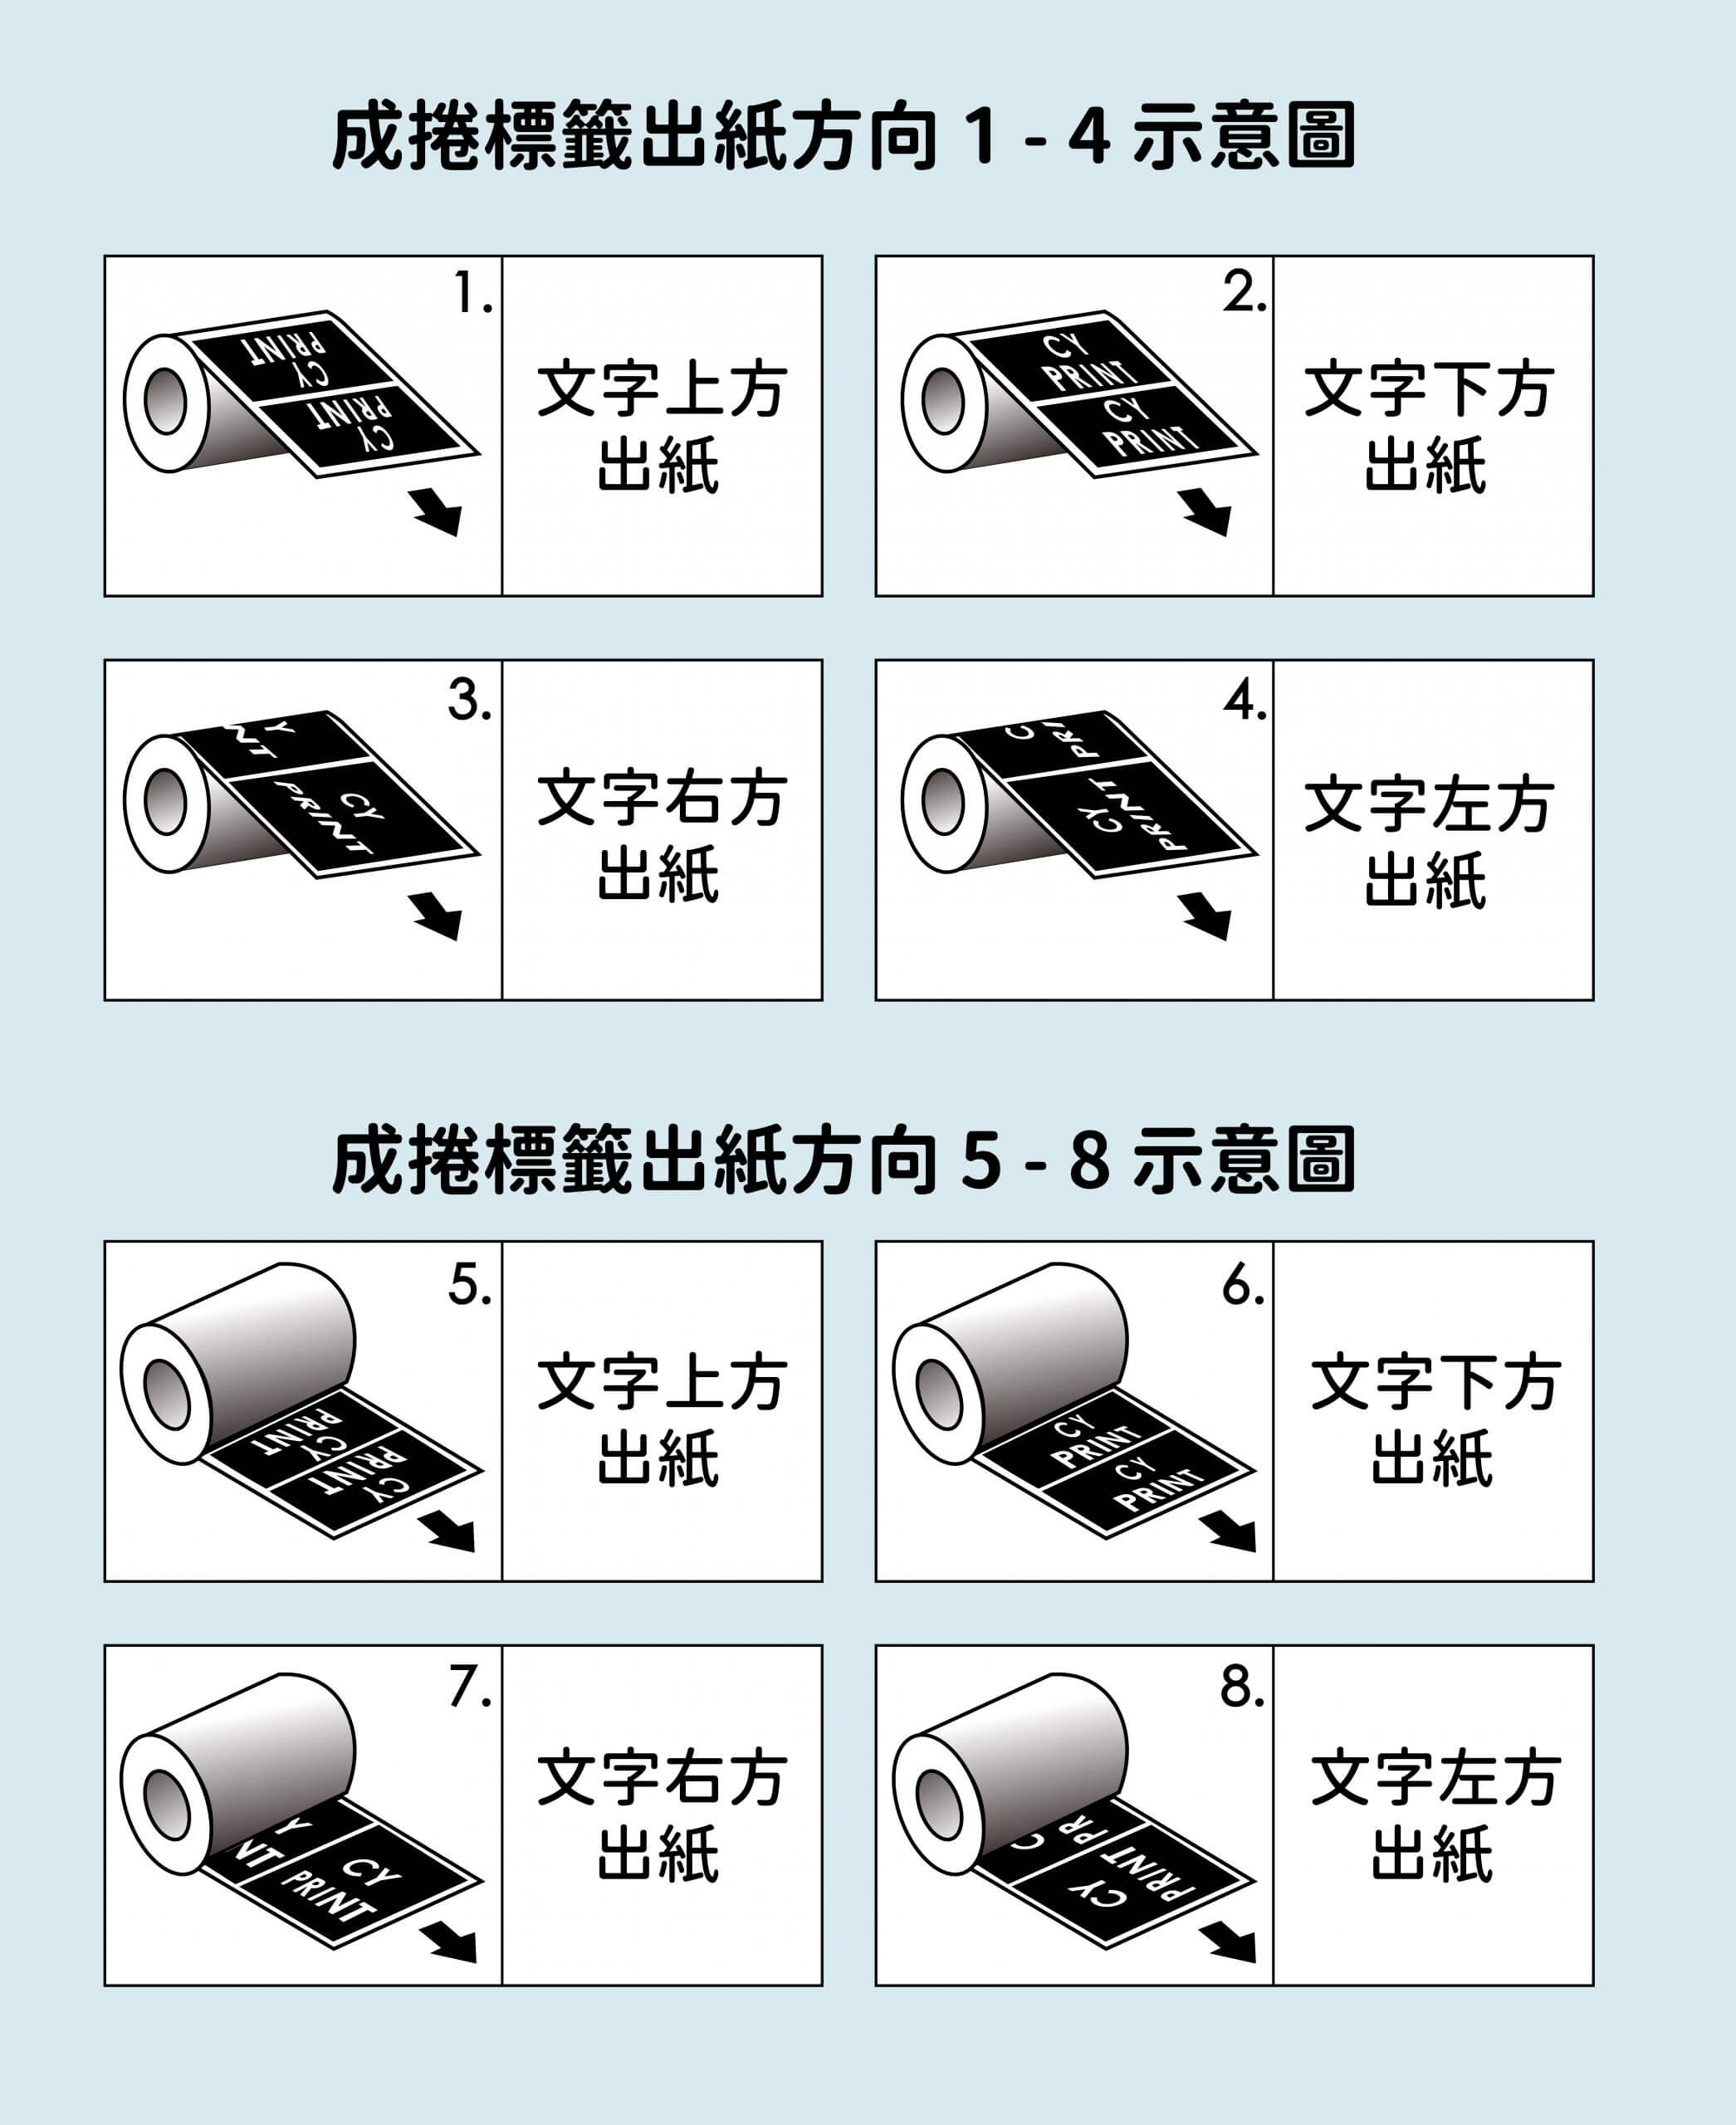 Copy position 貼紙出標方向 (中文)